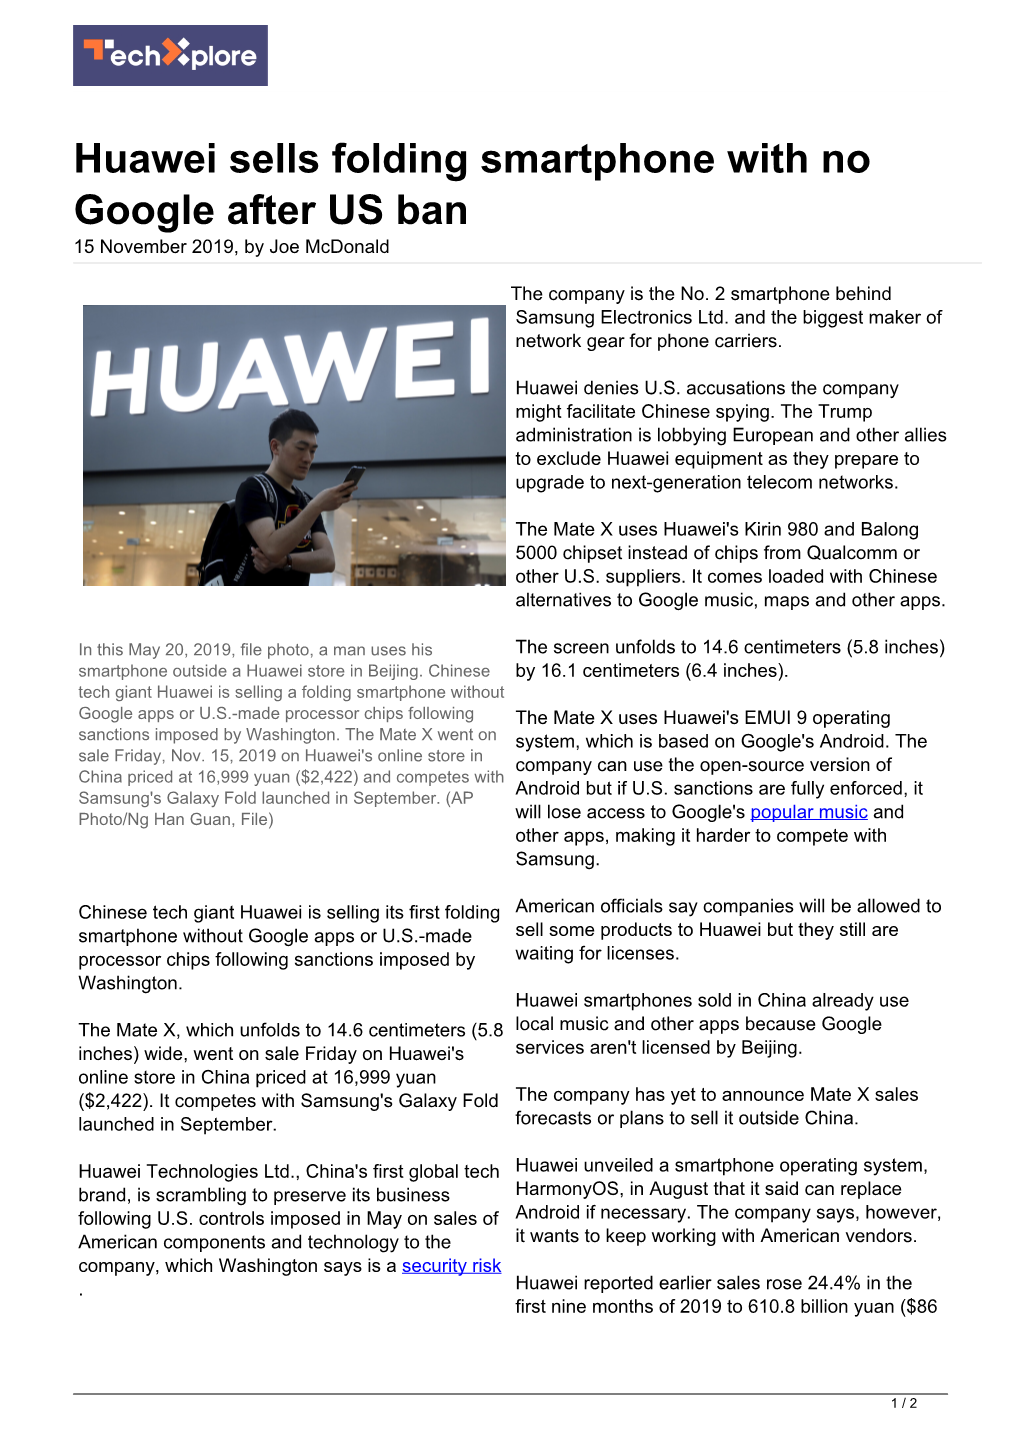 Huawei Sells Folding Smartphone with No Google After US Ban 15 November 2019, by Joe Mcdonald